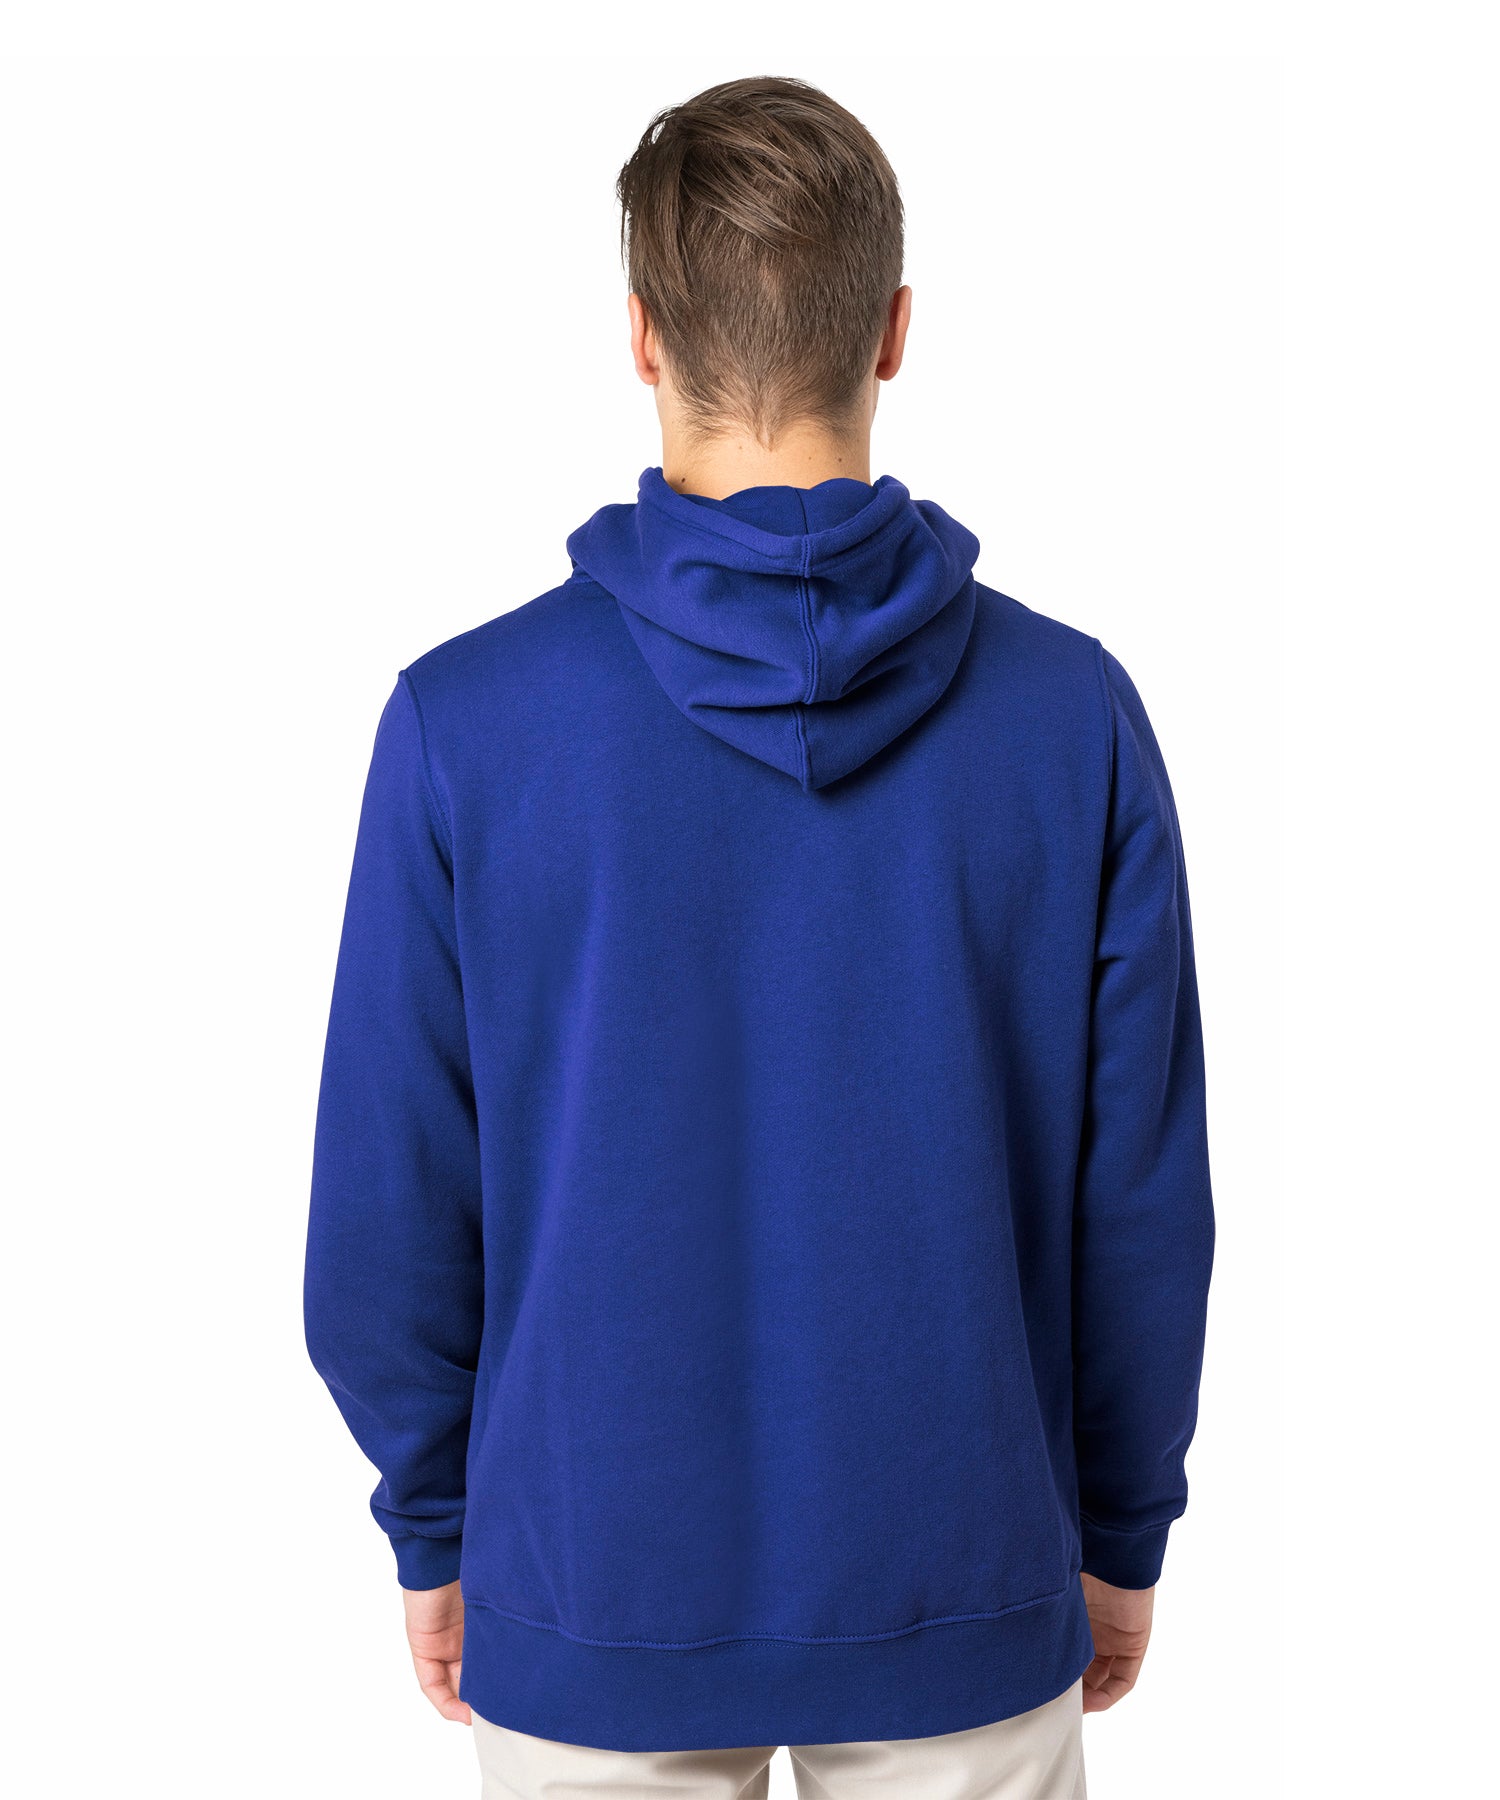 Premium Plain Cotton Royal Blue Hoodie/Sweatshirt